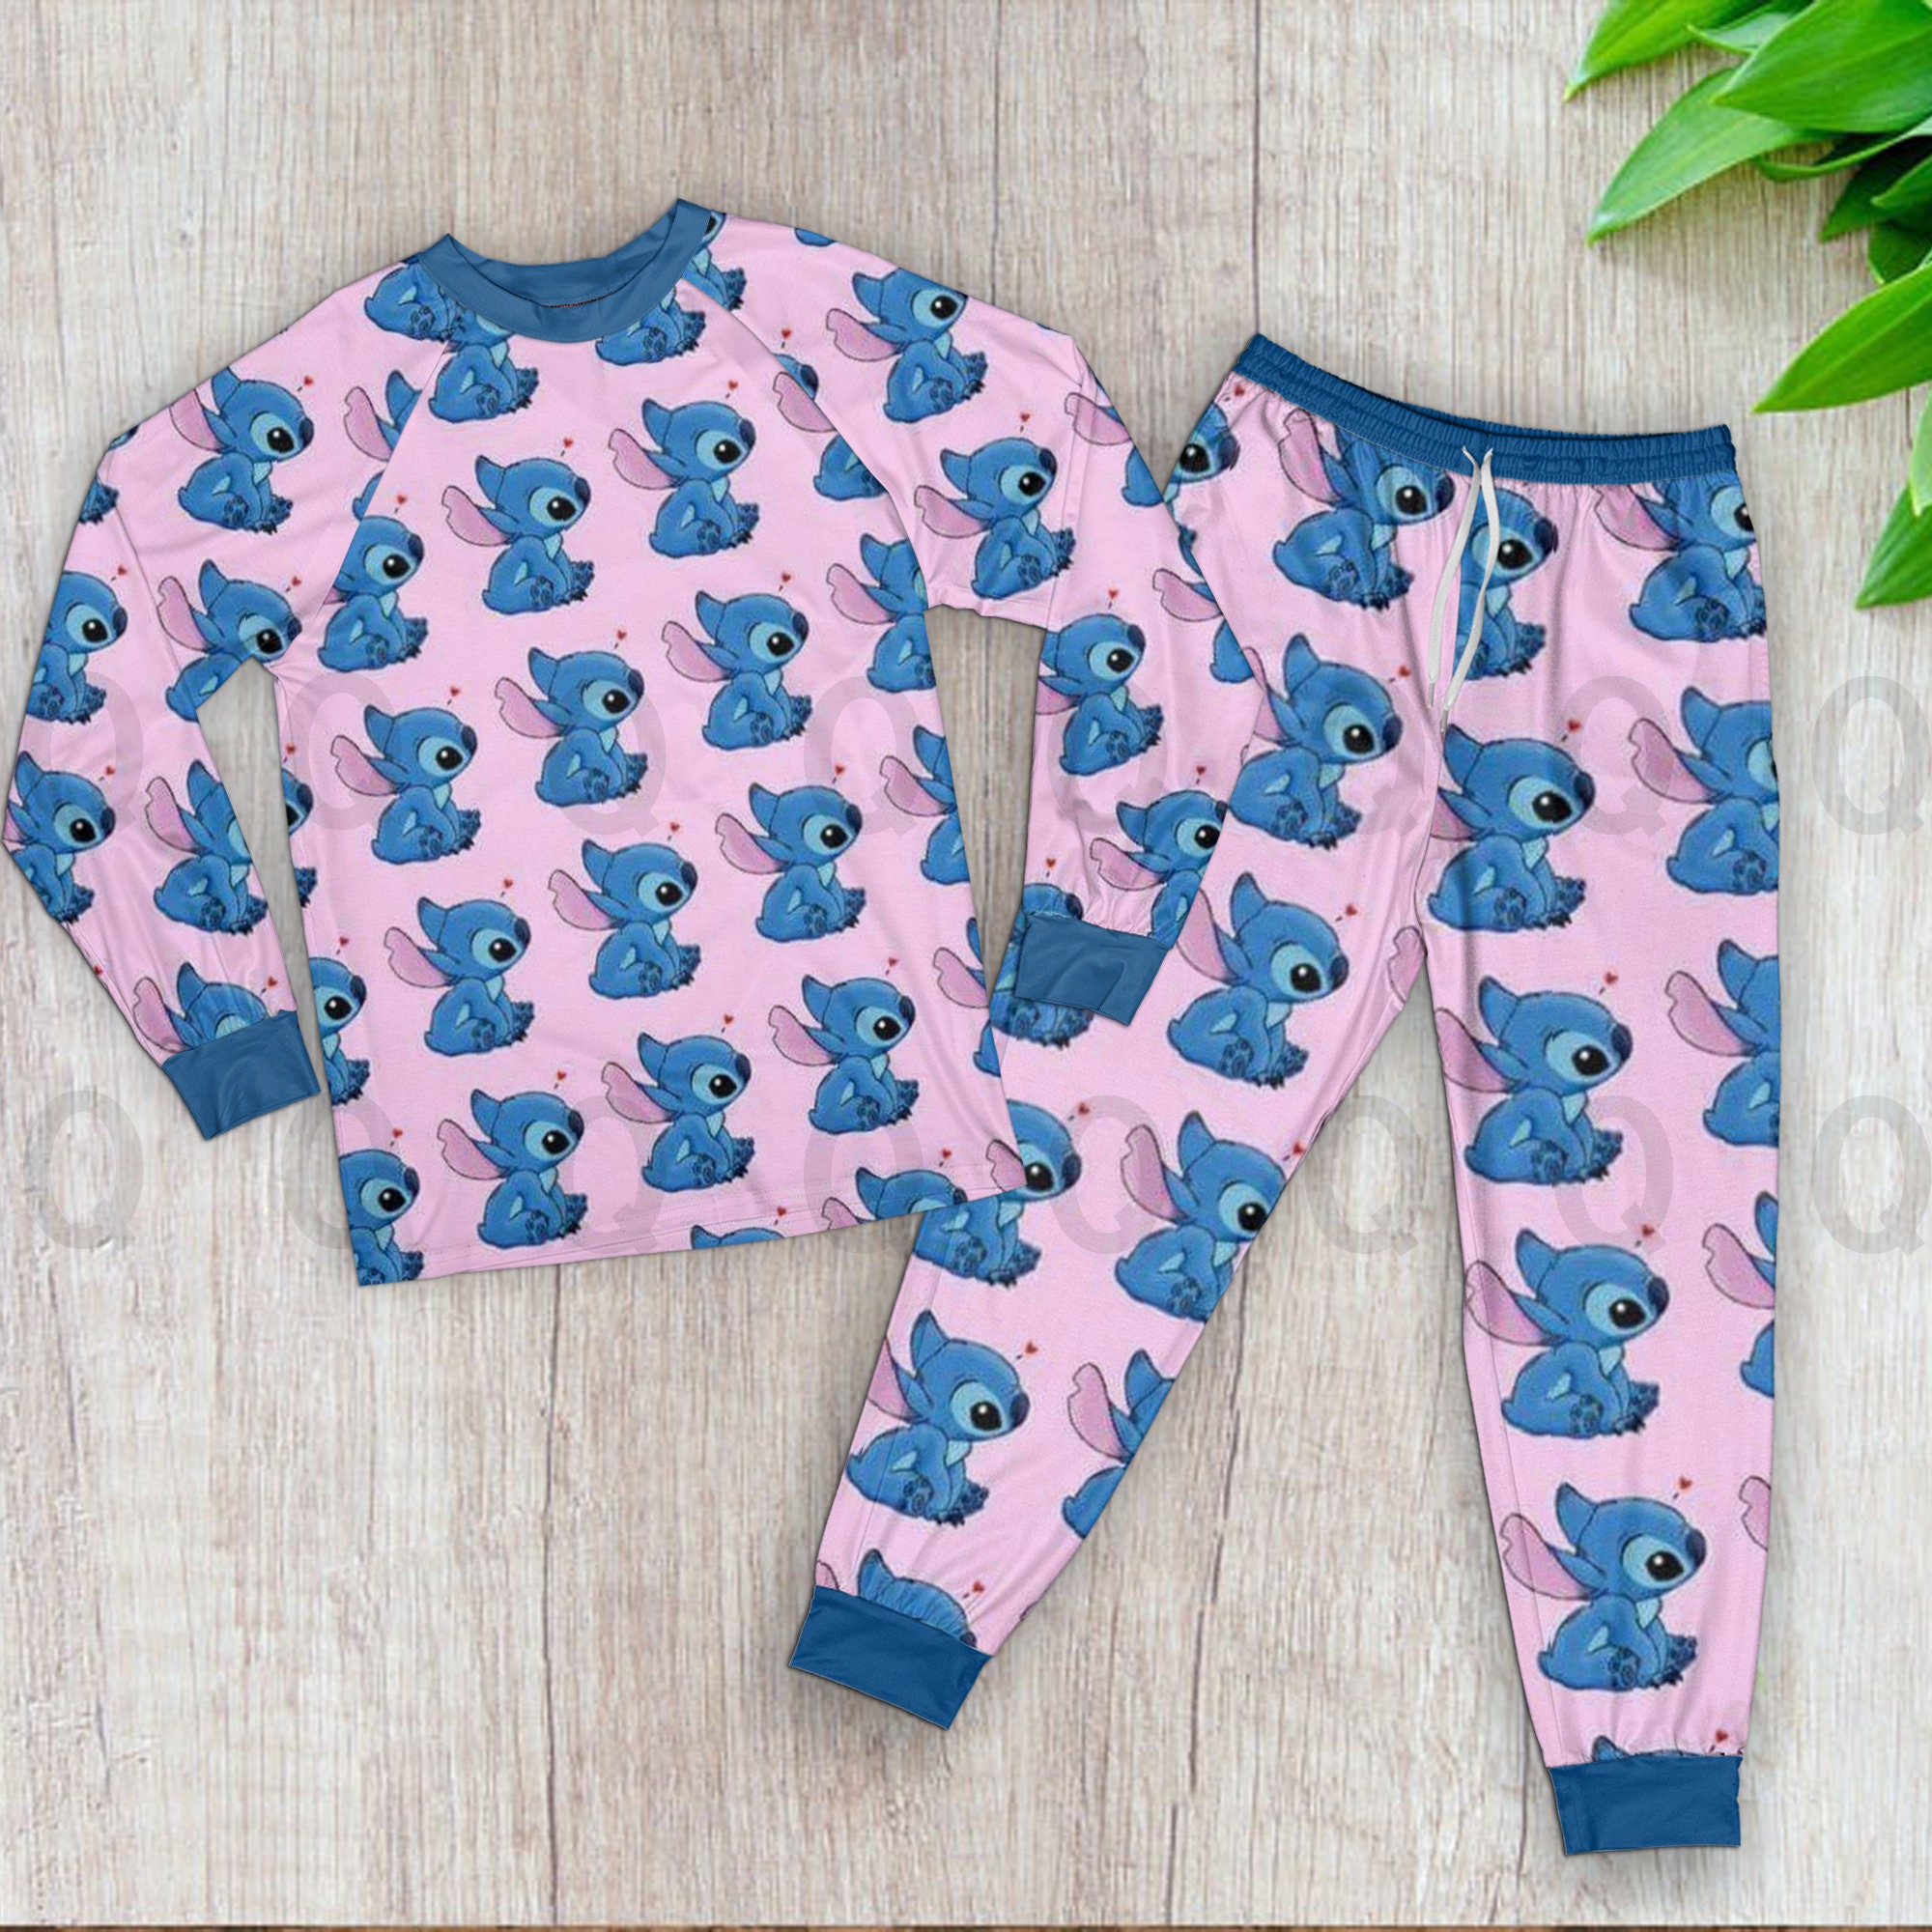 Stitch Cute Pajamas Set, Stitch Pyjama, Disney Pajama sold by ...